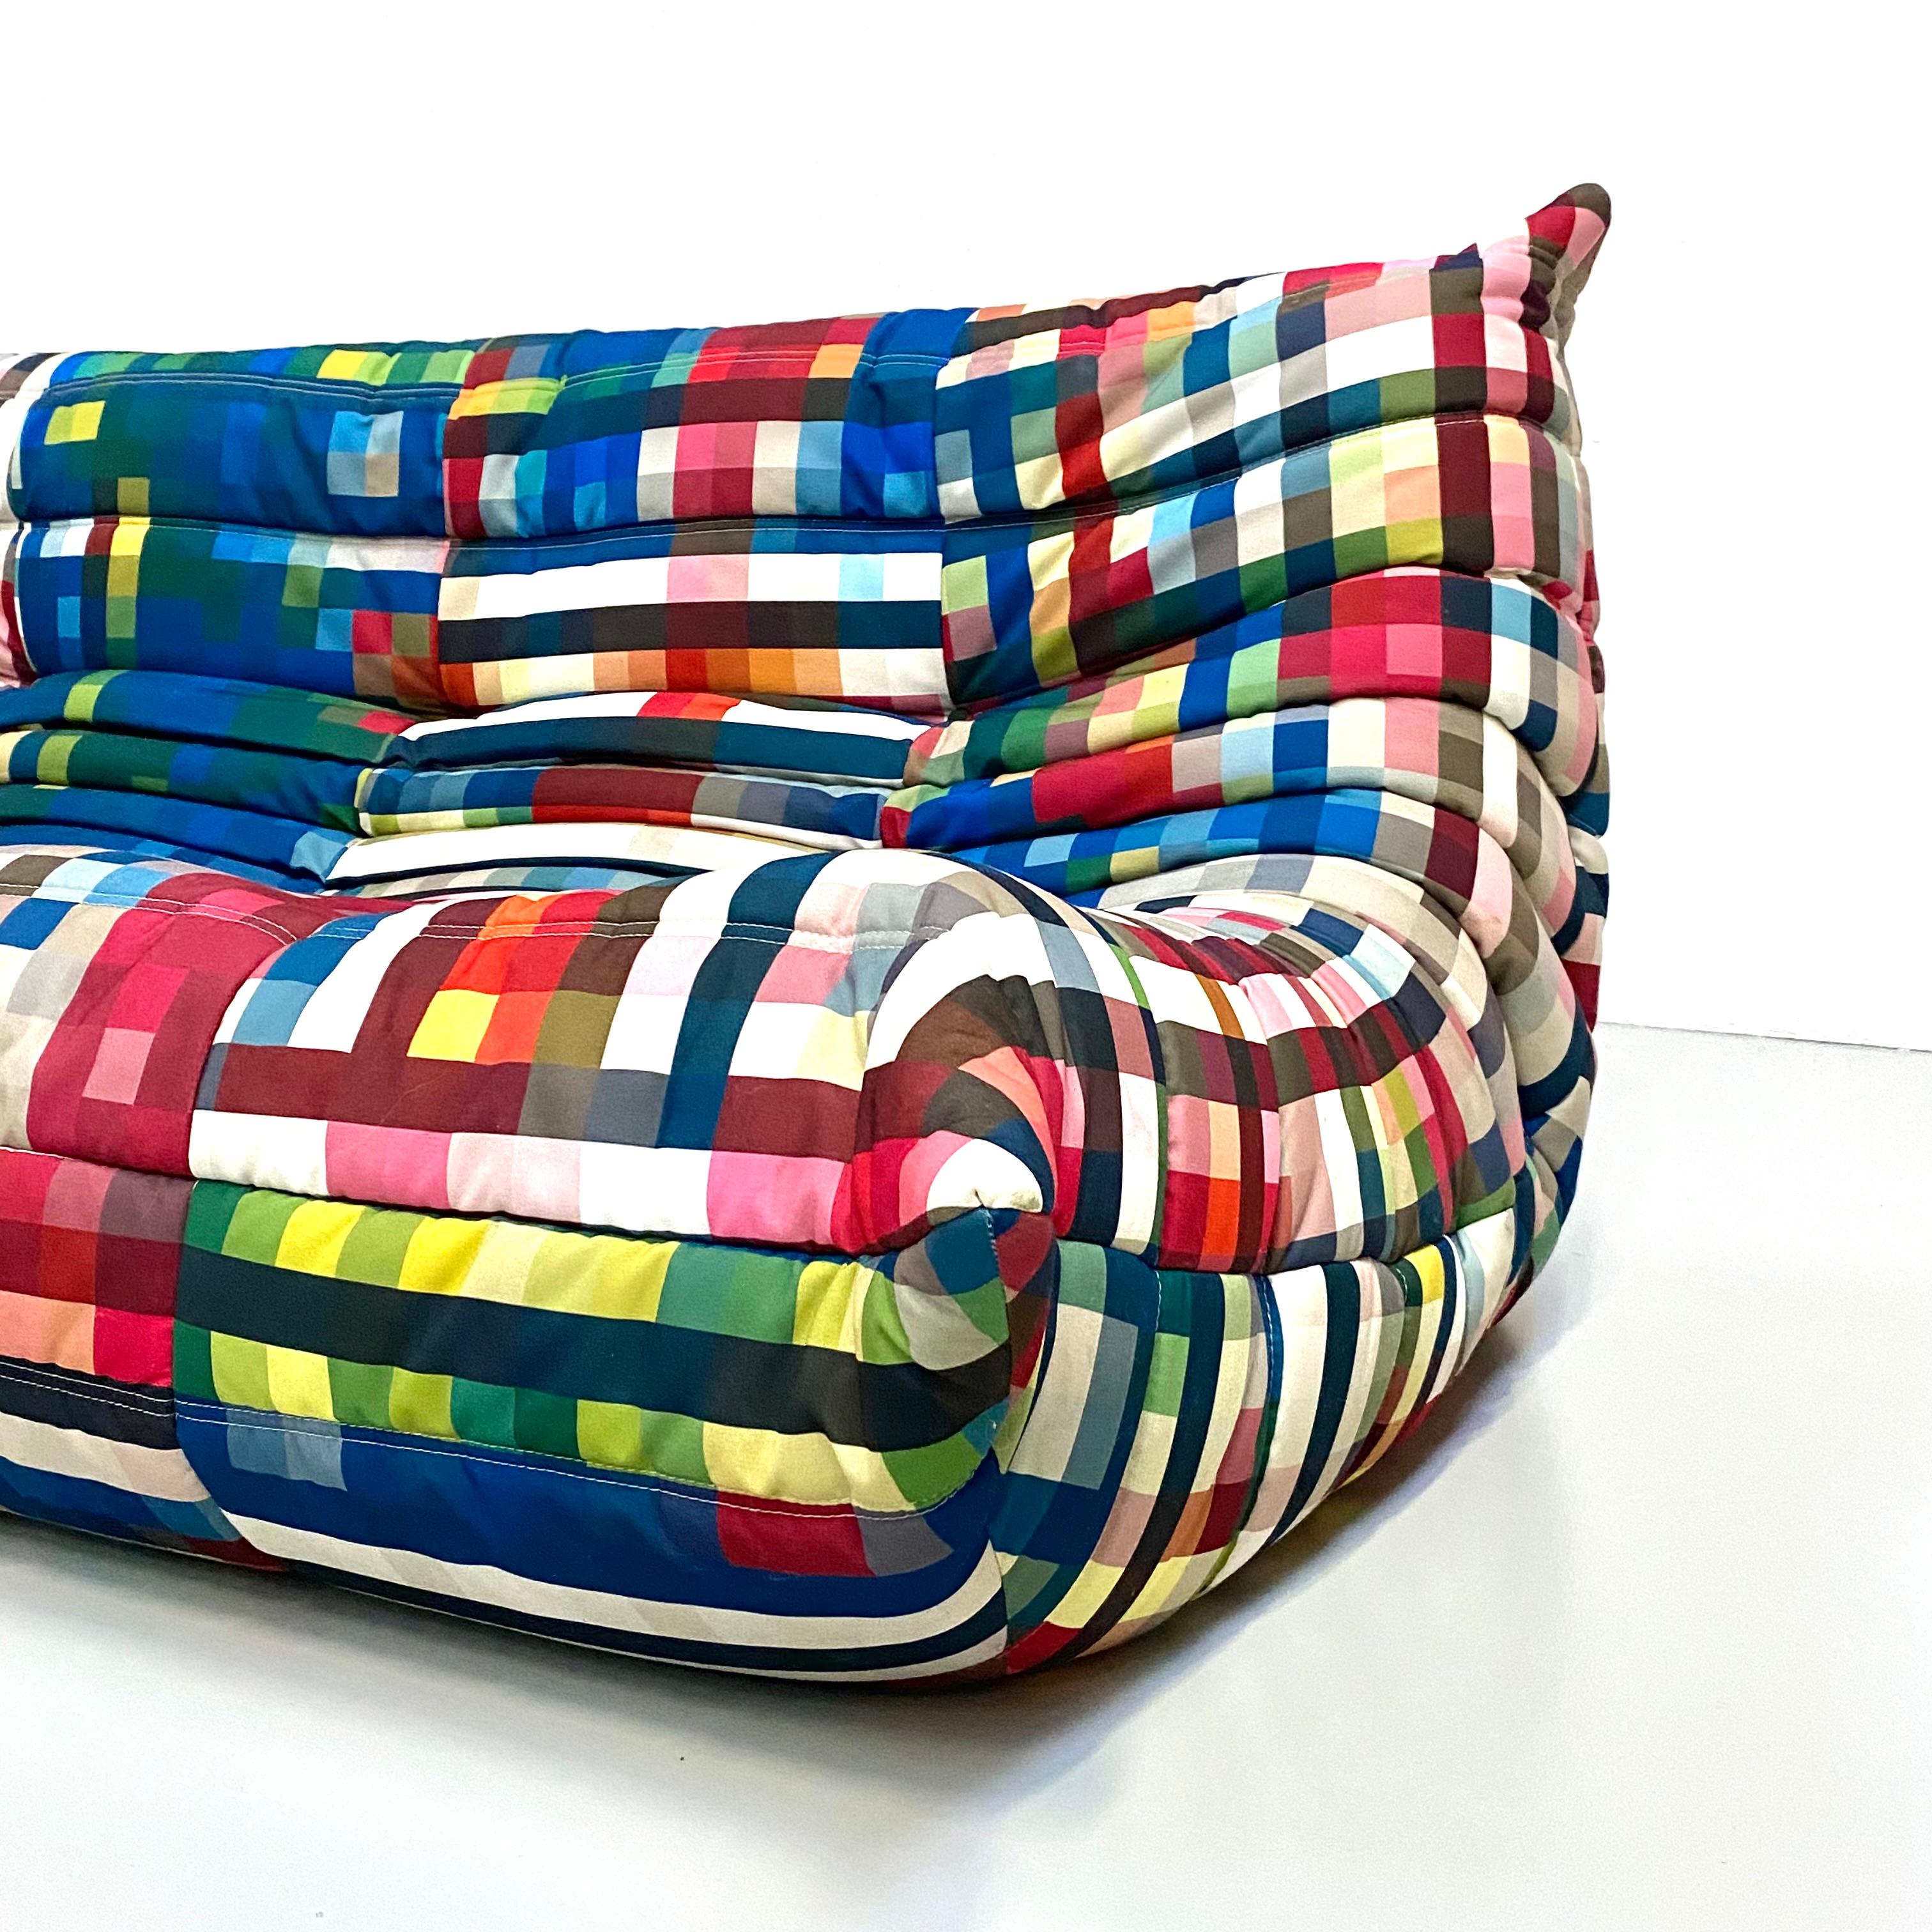 Contemporary French Togo Shanghai Sofa by Michel Ducaroy & Cristian Zuzunga for Ligne Roset. For Sale